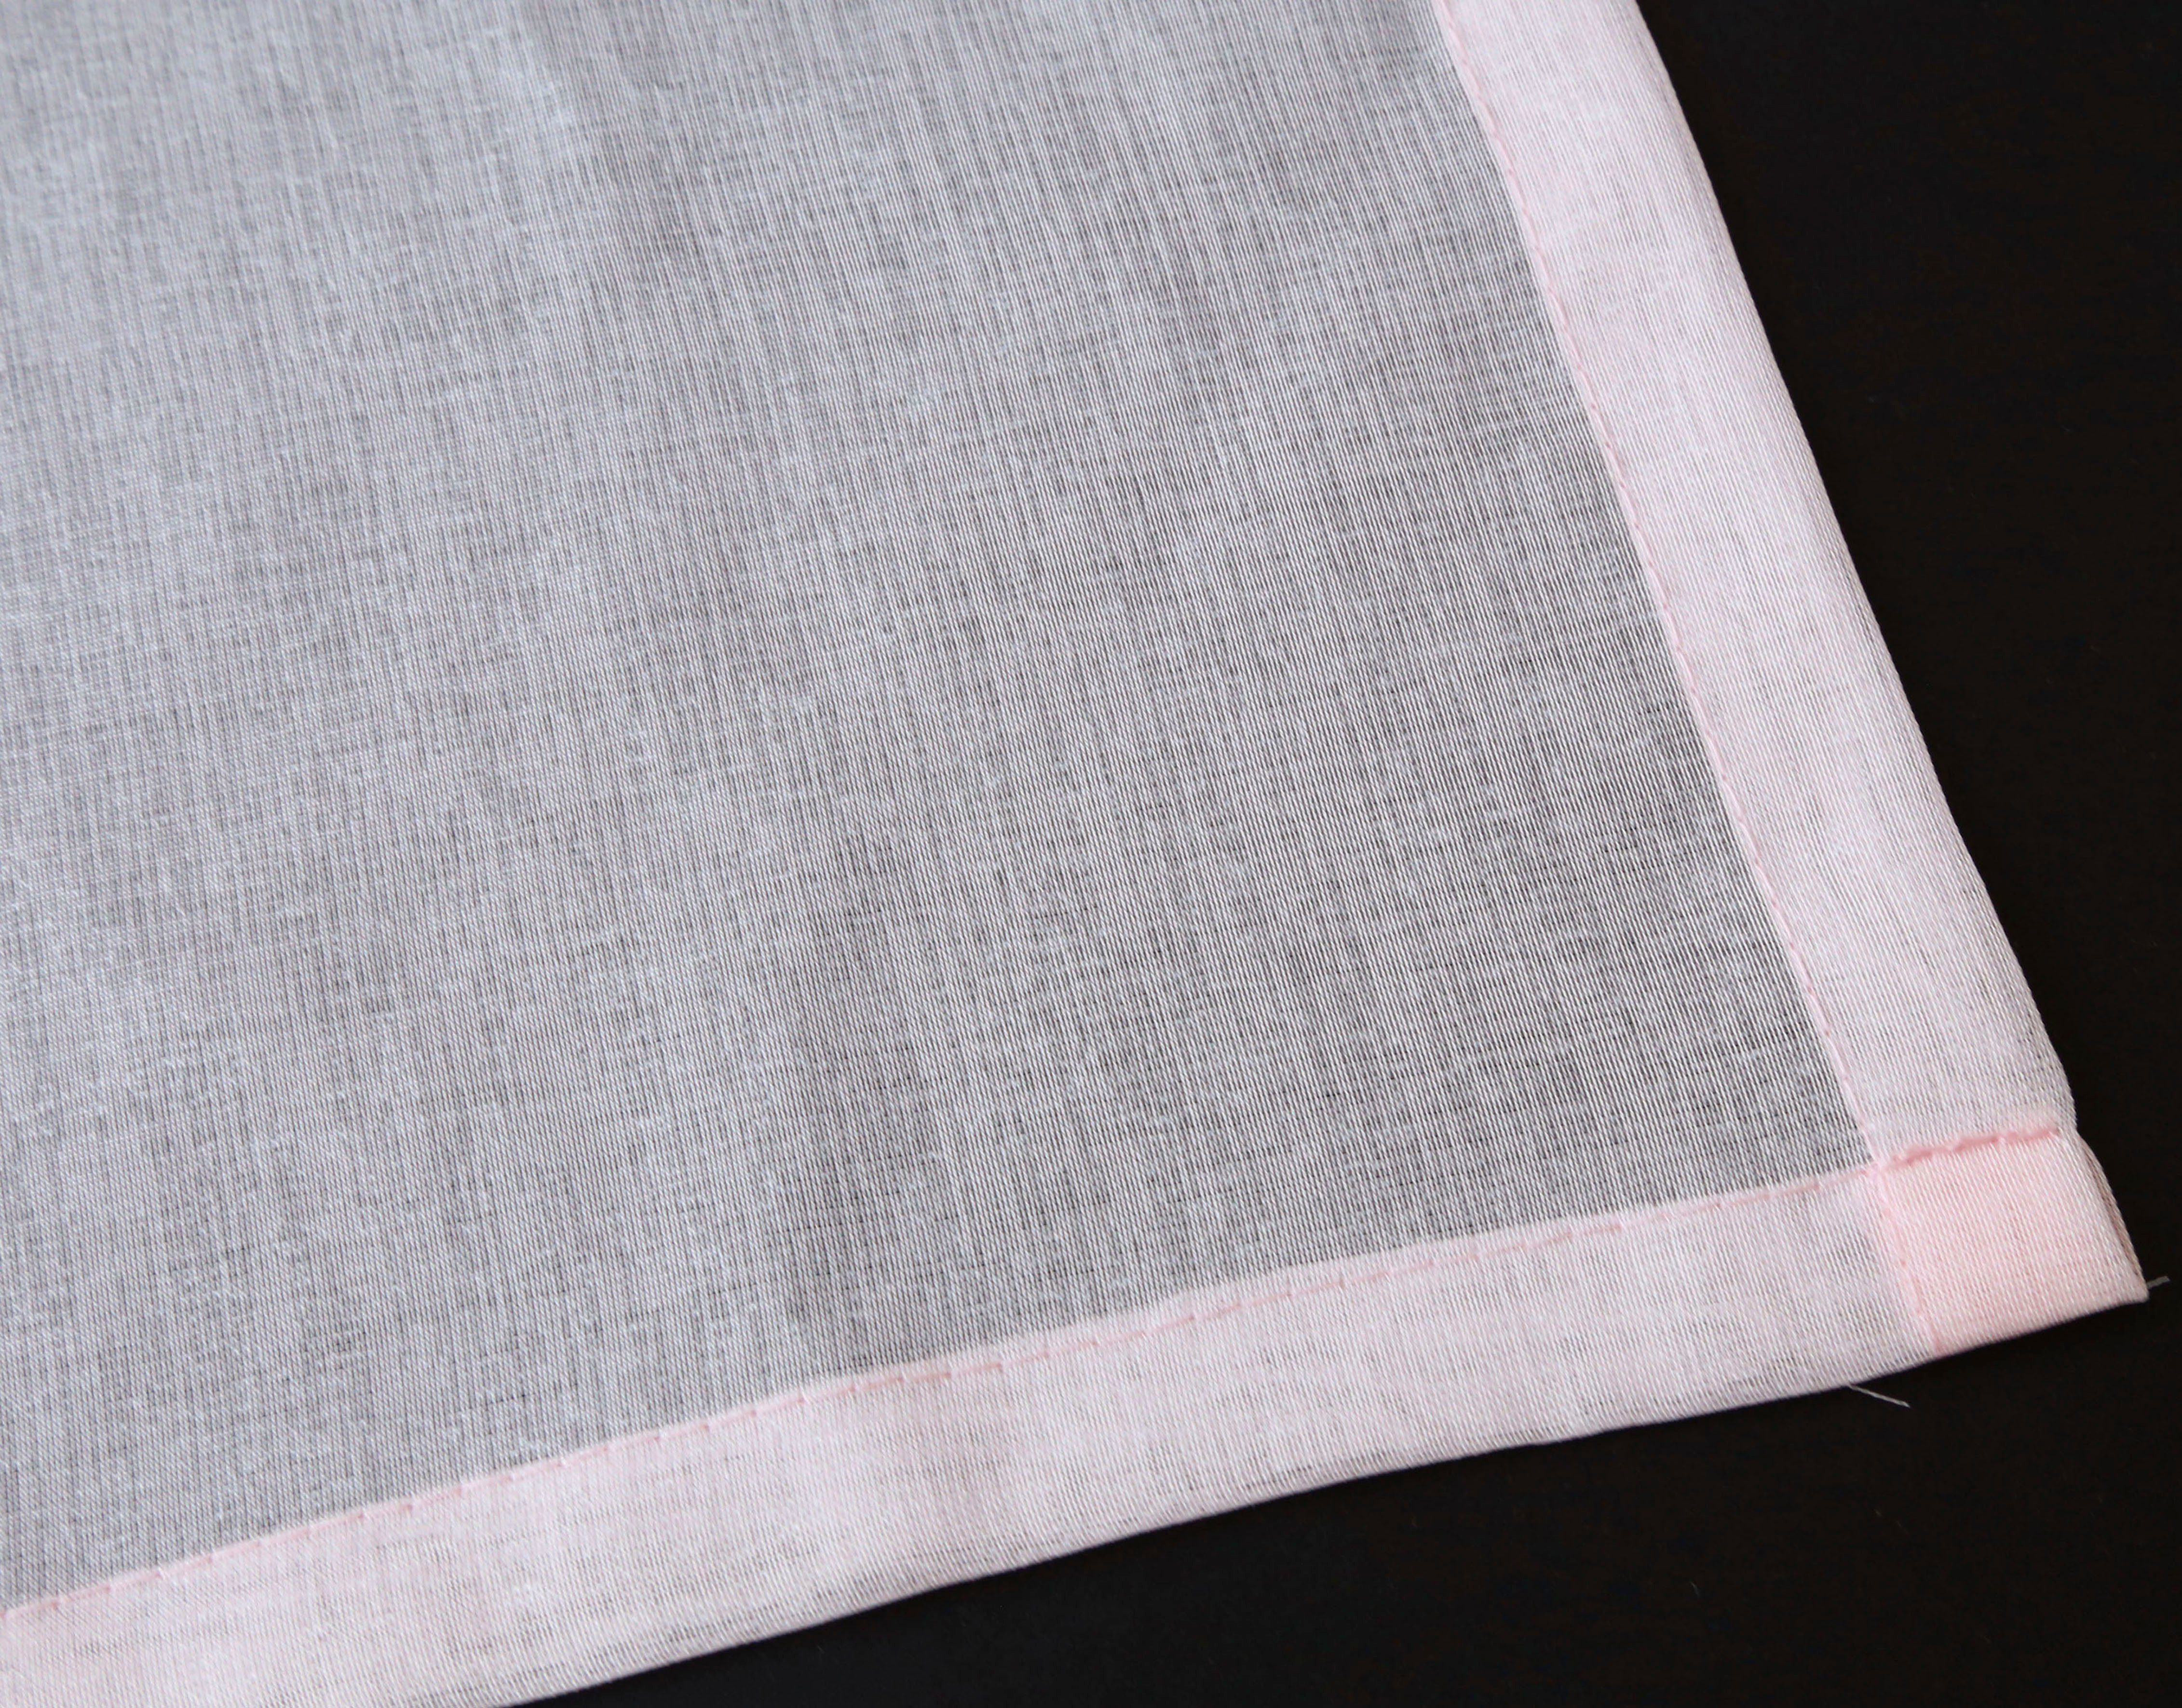 Gardine Dolly, my gewebt (1 rosé transparent, Multifunktionsband home, transparent, St), glatt, Polyester